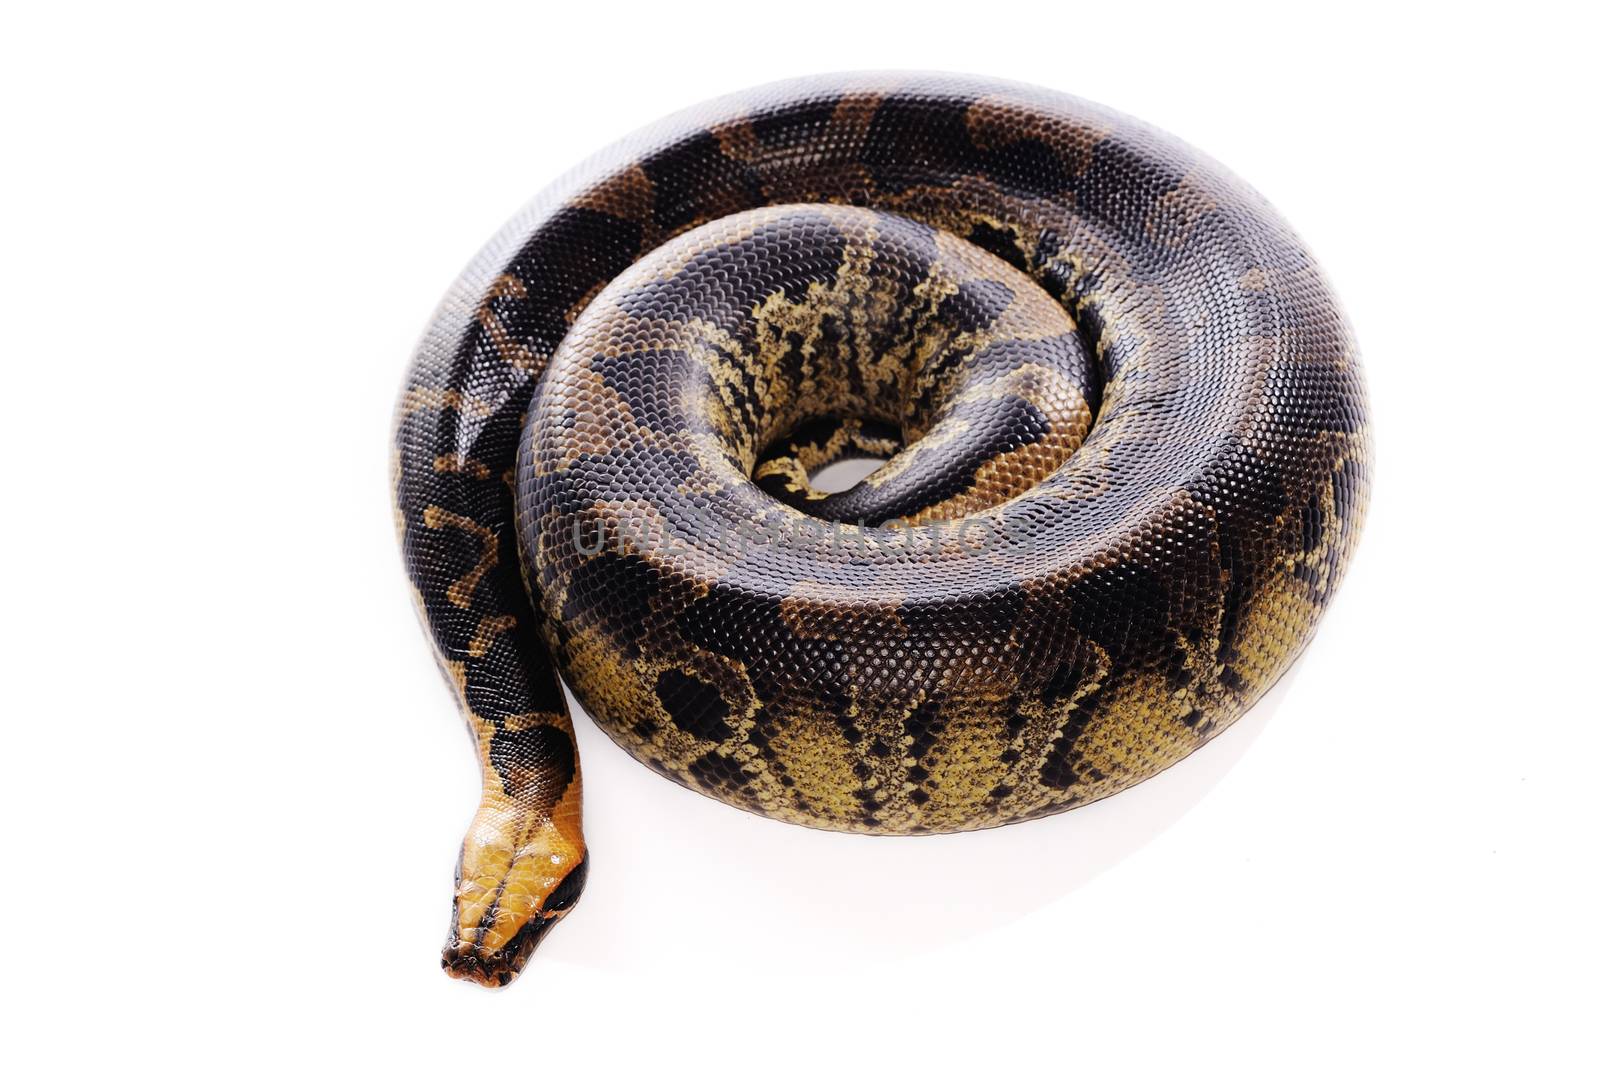 Pastel snake by untouchablephoto